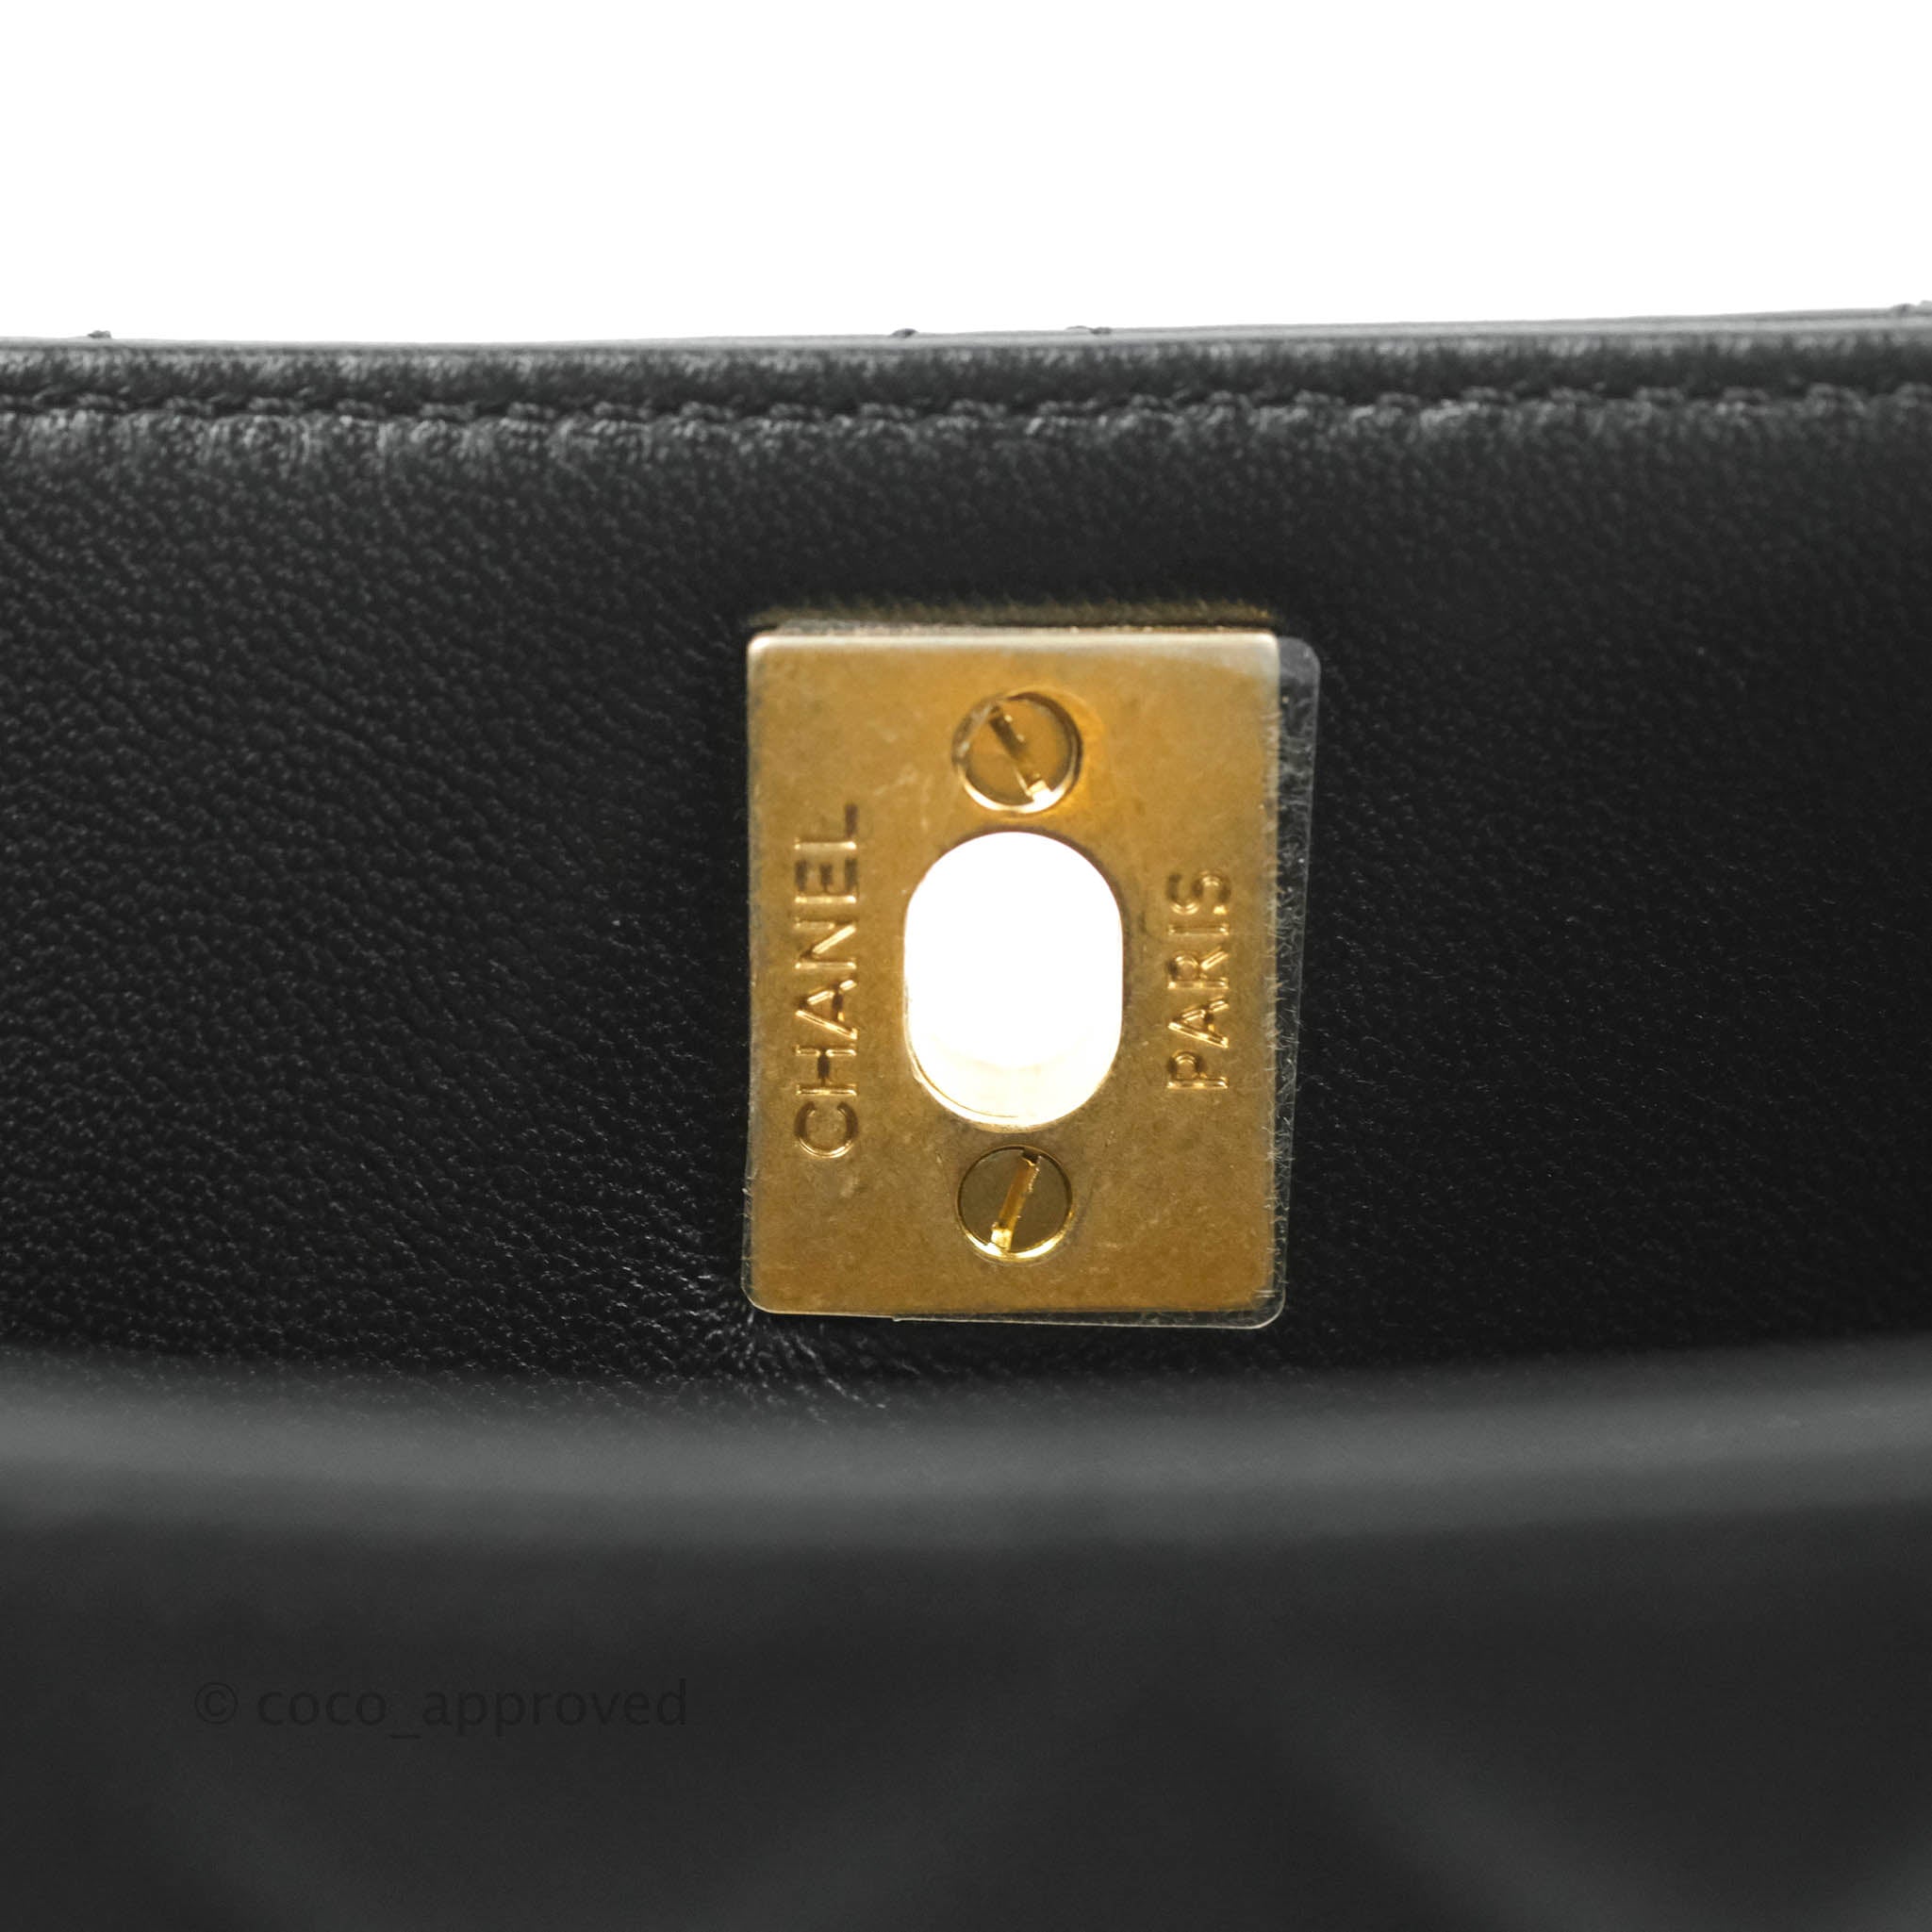 Ready Stock📣 Chanel Button Up Hobo /Premium Grade, Women's